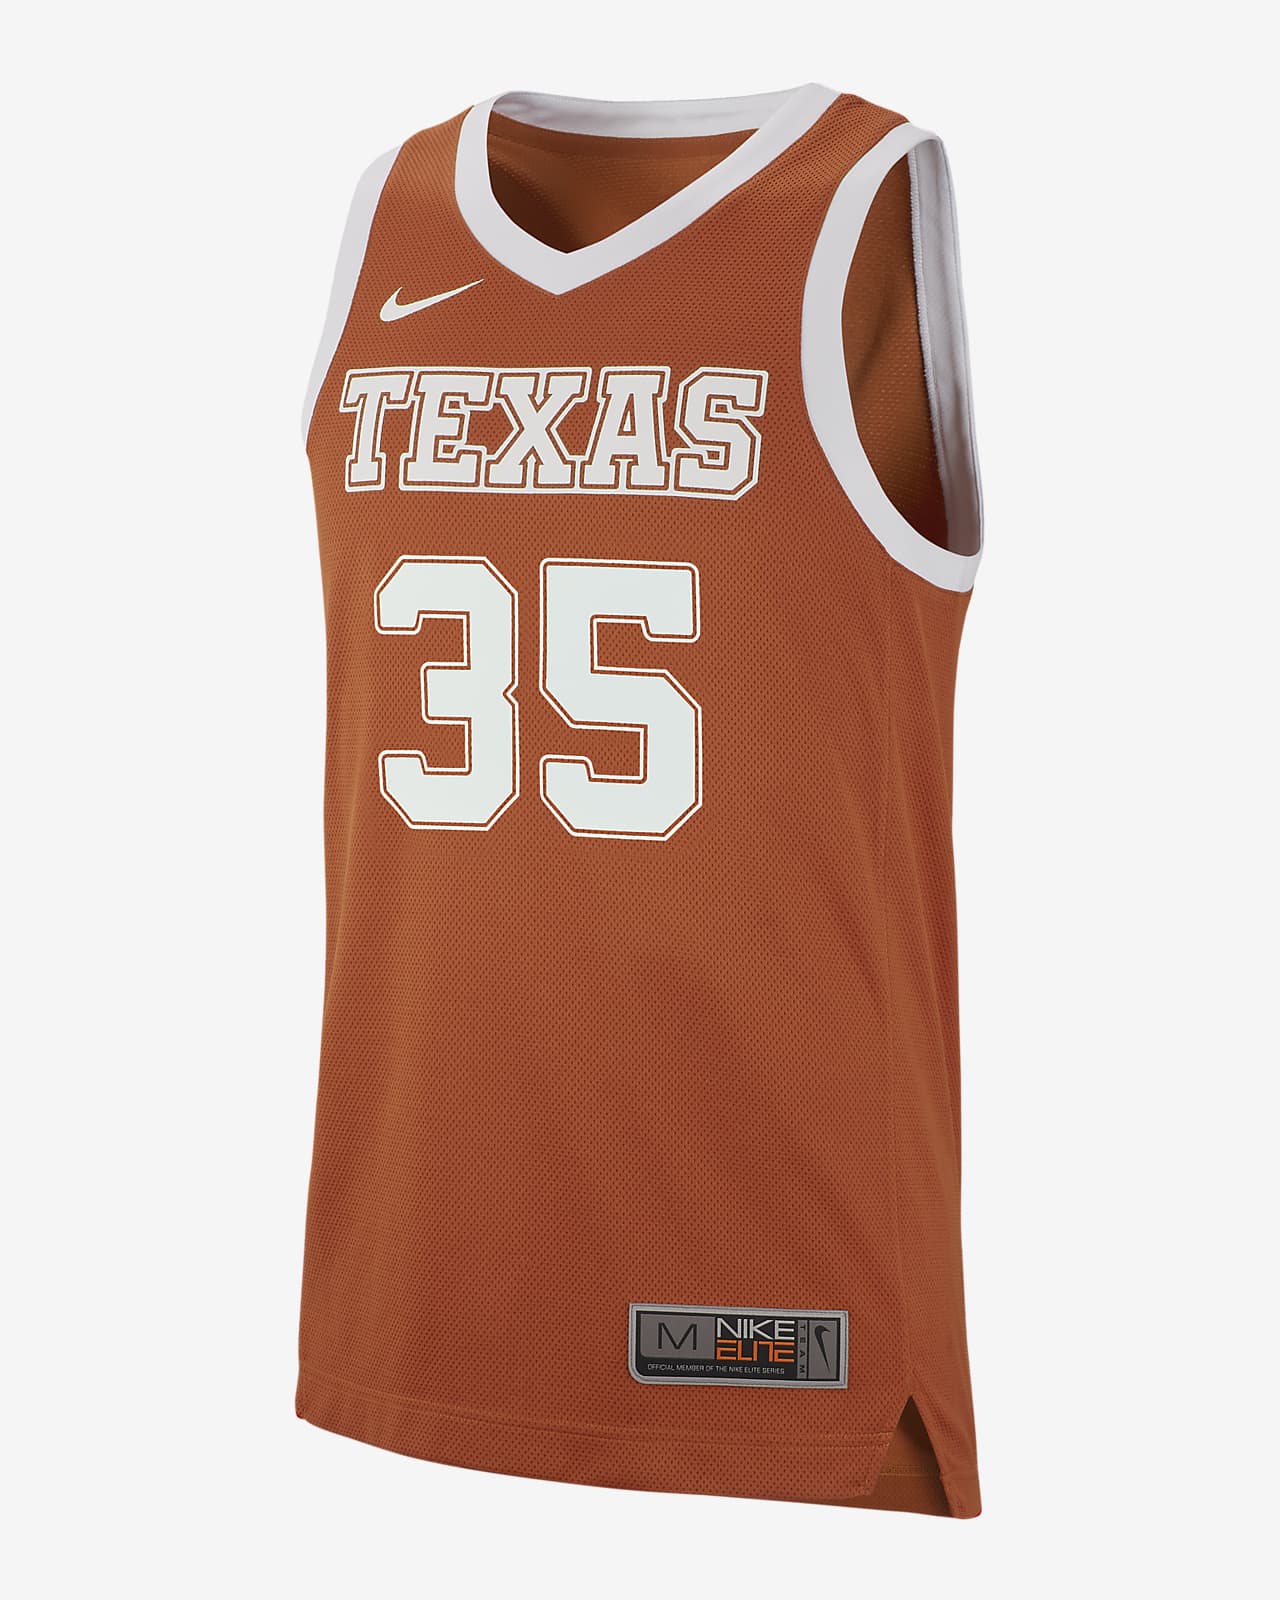 Nike College Replica (Texas) Men's Basketball Jersey.